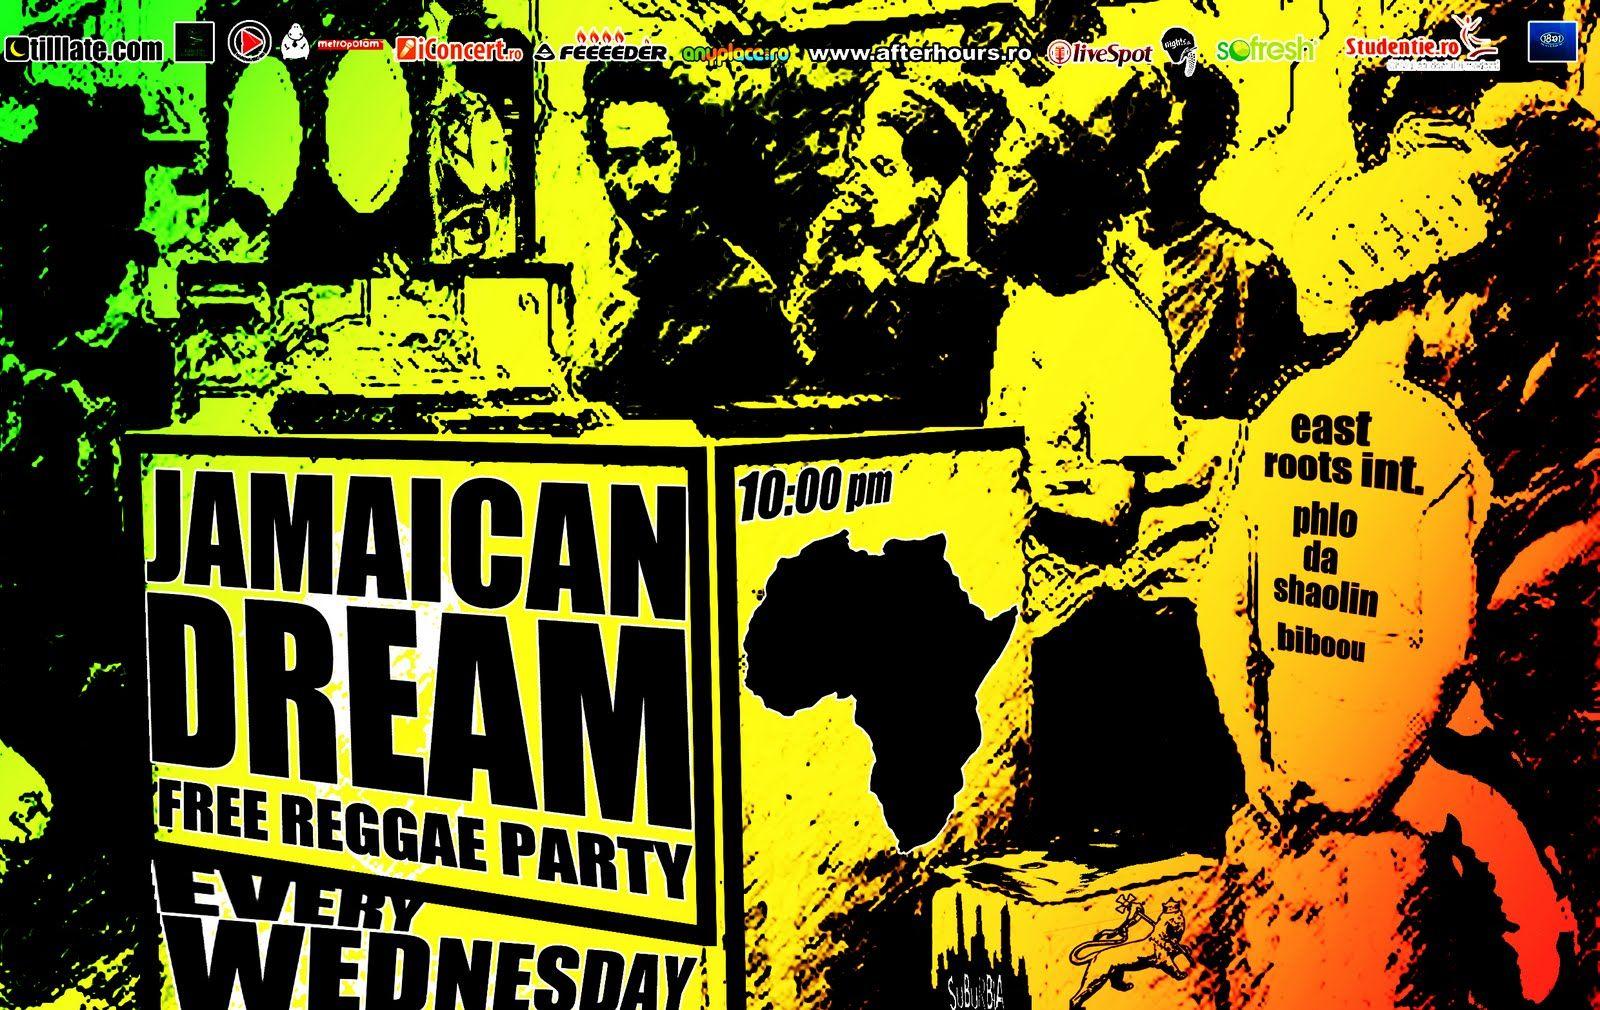 Free Reggae Party! Every wednesday blog up!